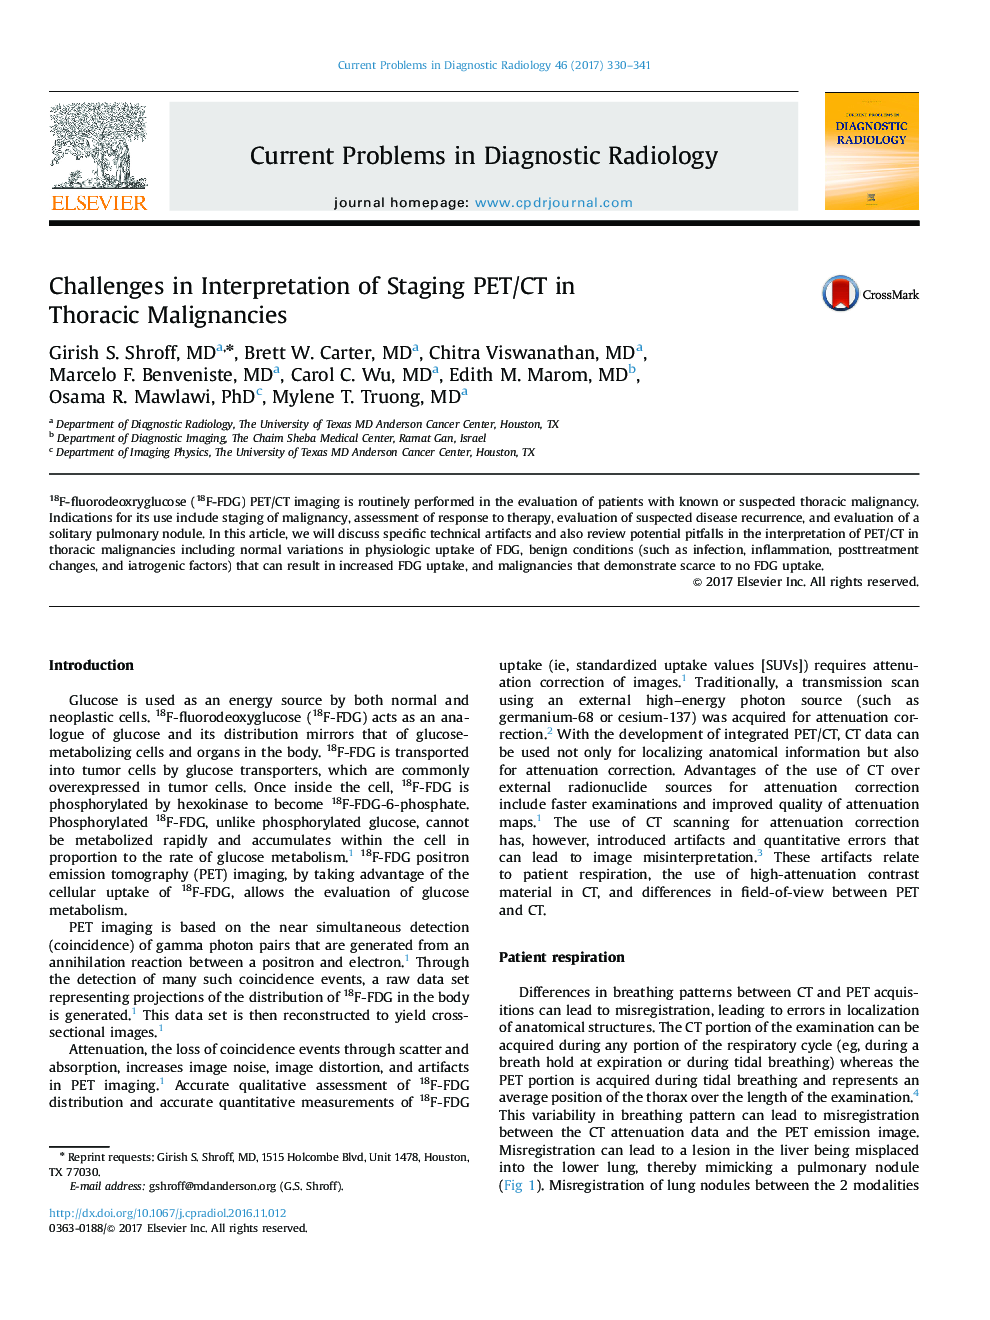 Challenges in Interpretation of Staging PET/CT in Thoracic Malignancies